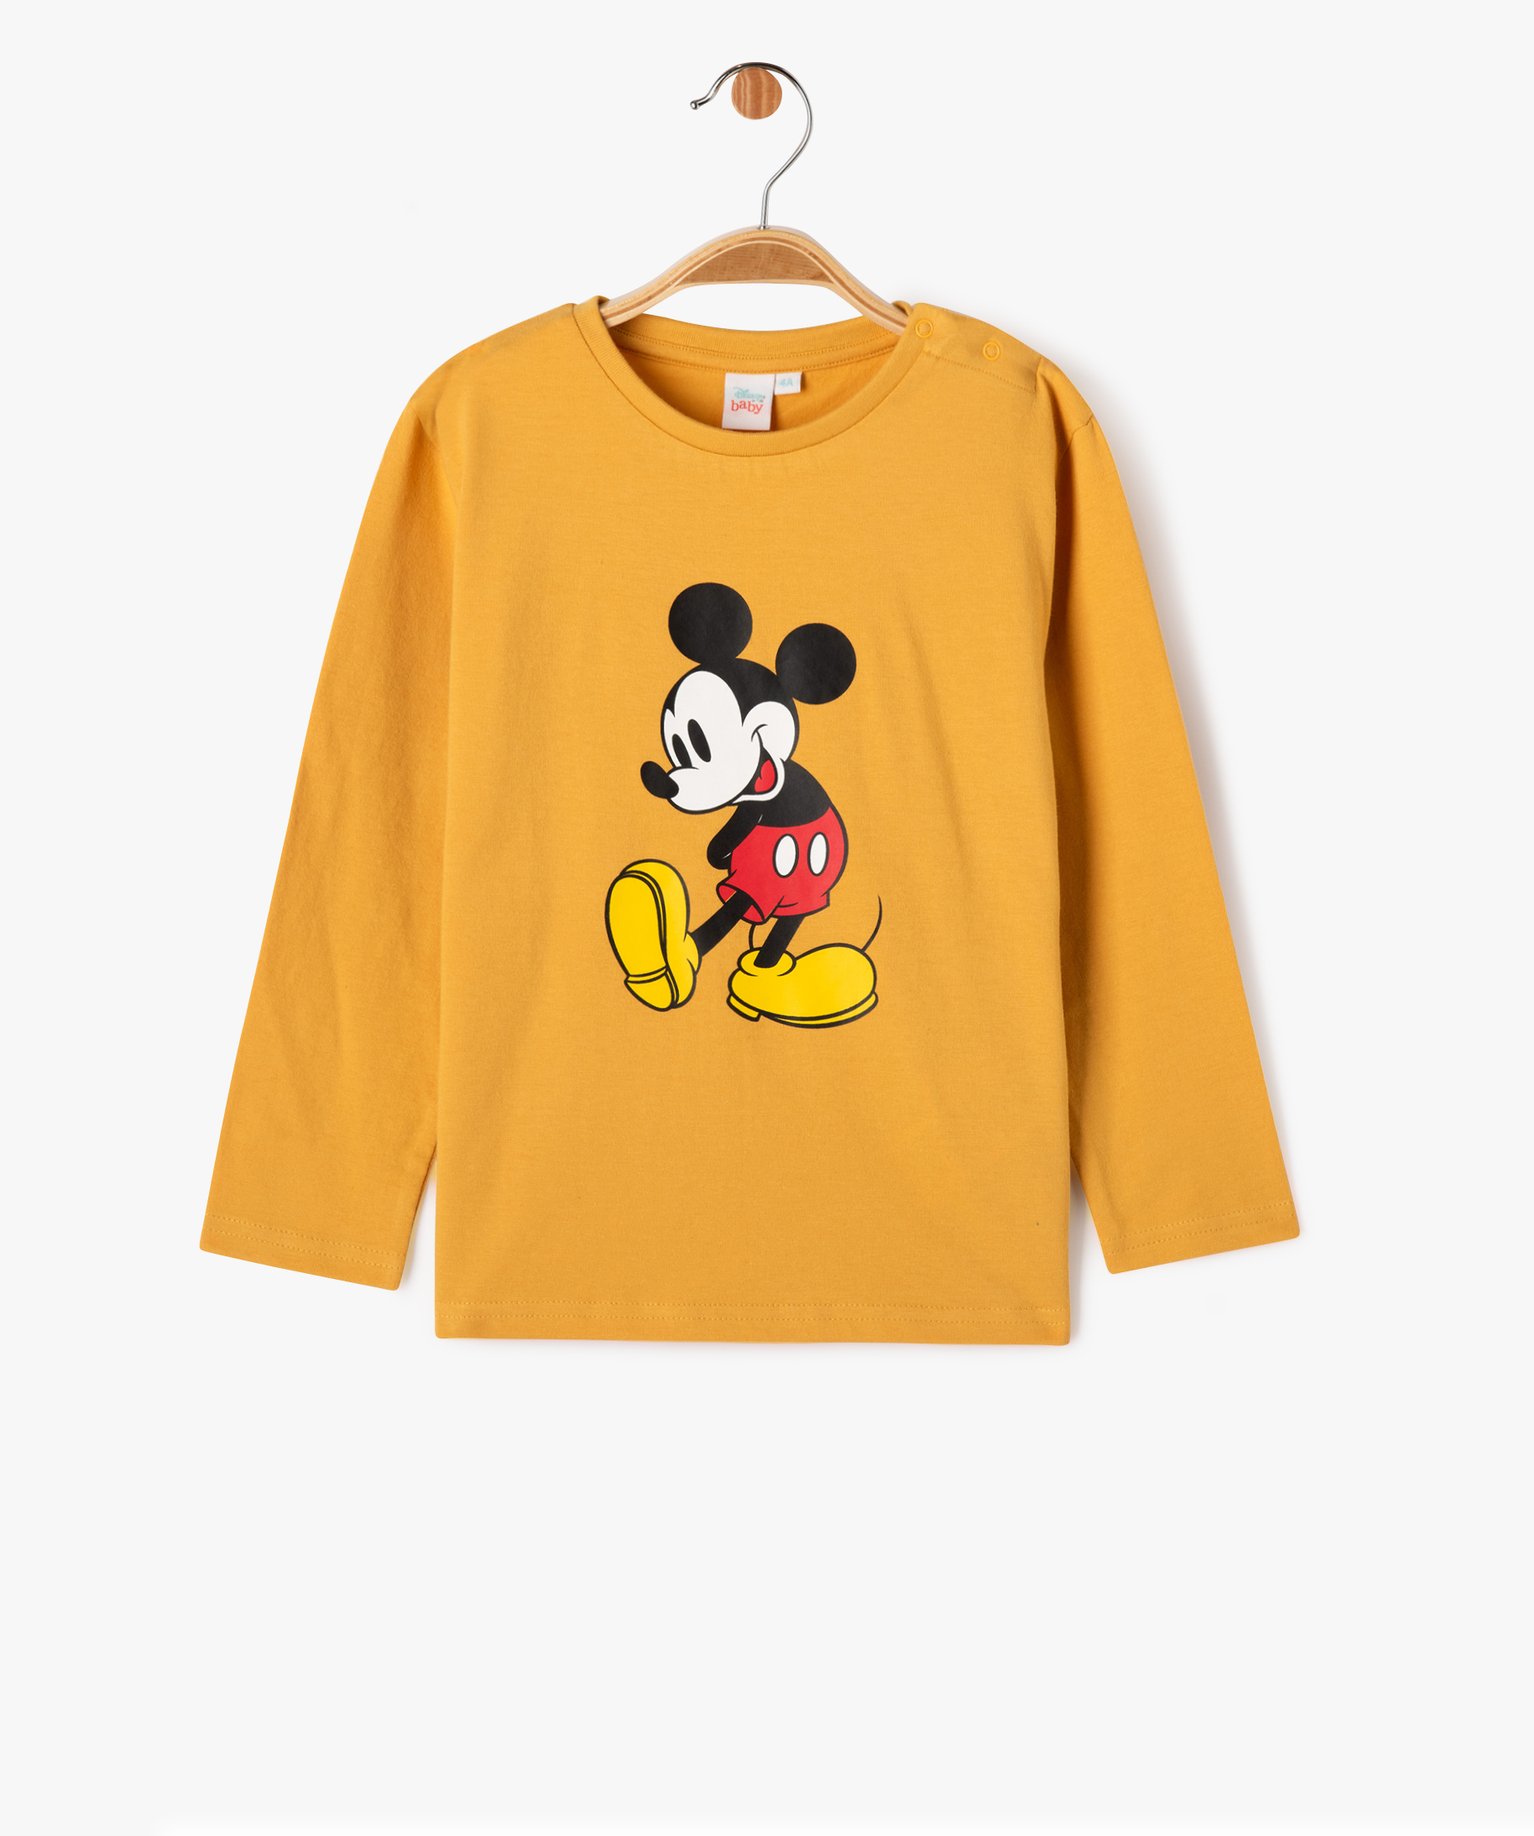 Tee-shirt manches longues imprimé Mickey bébé garçon - Disney - 3M - jaune - DISNEY BABY